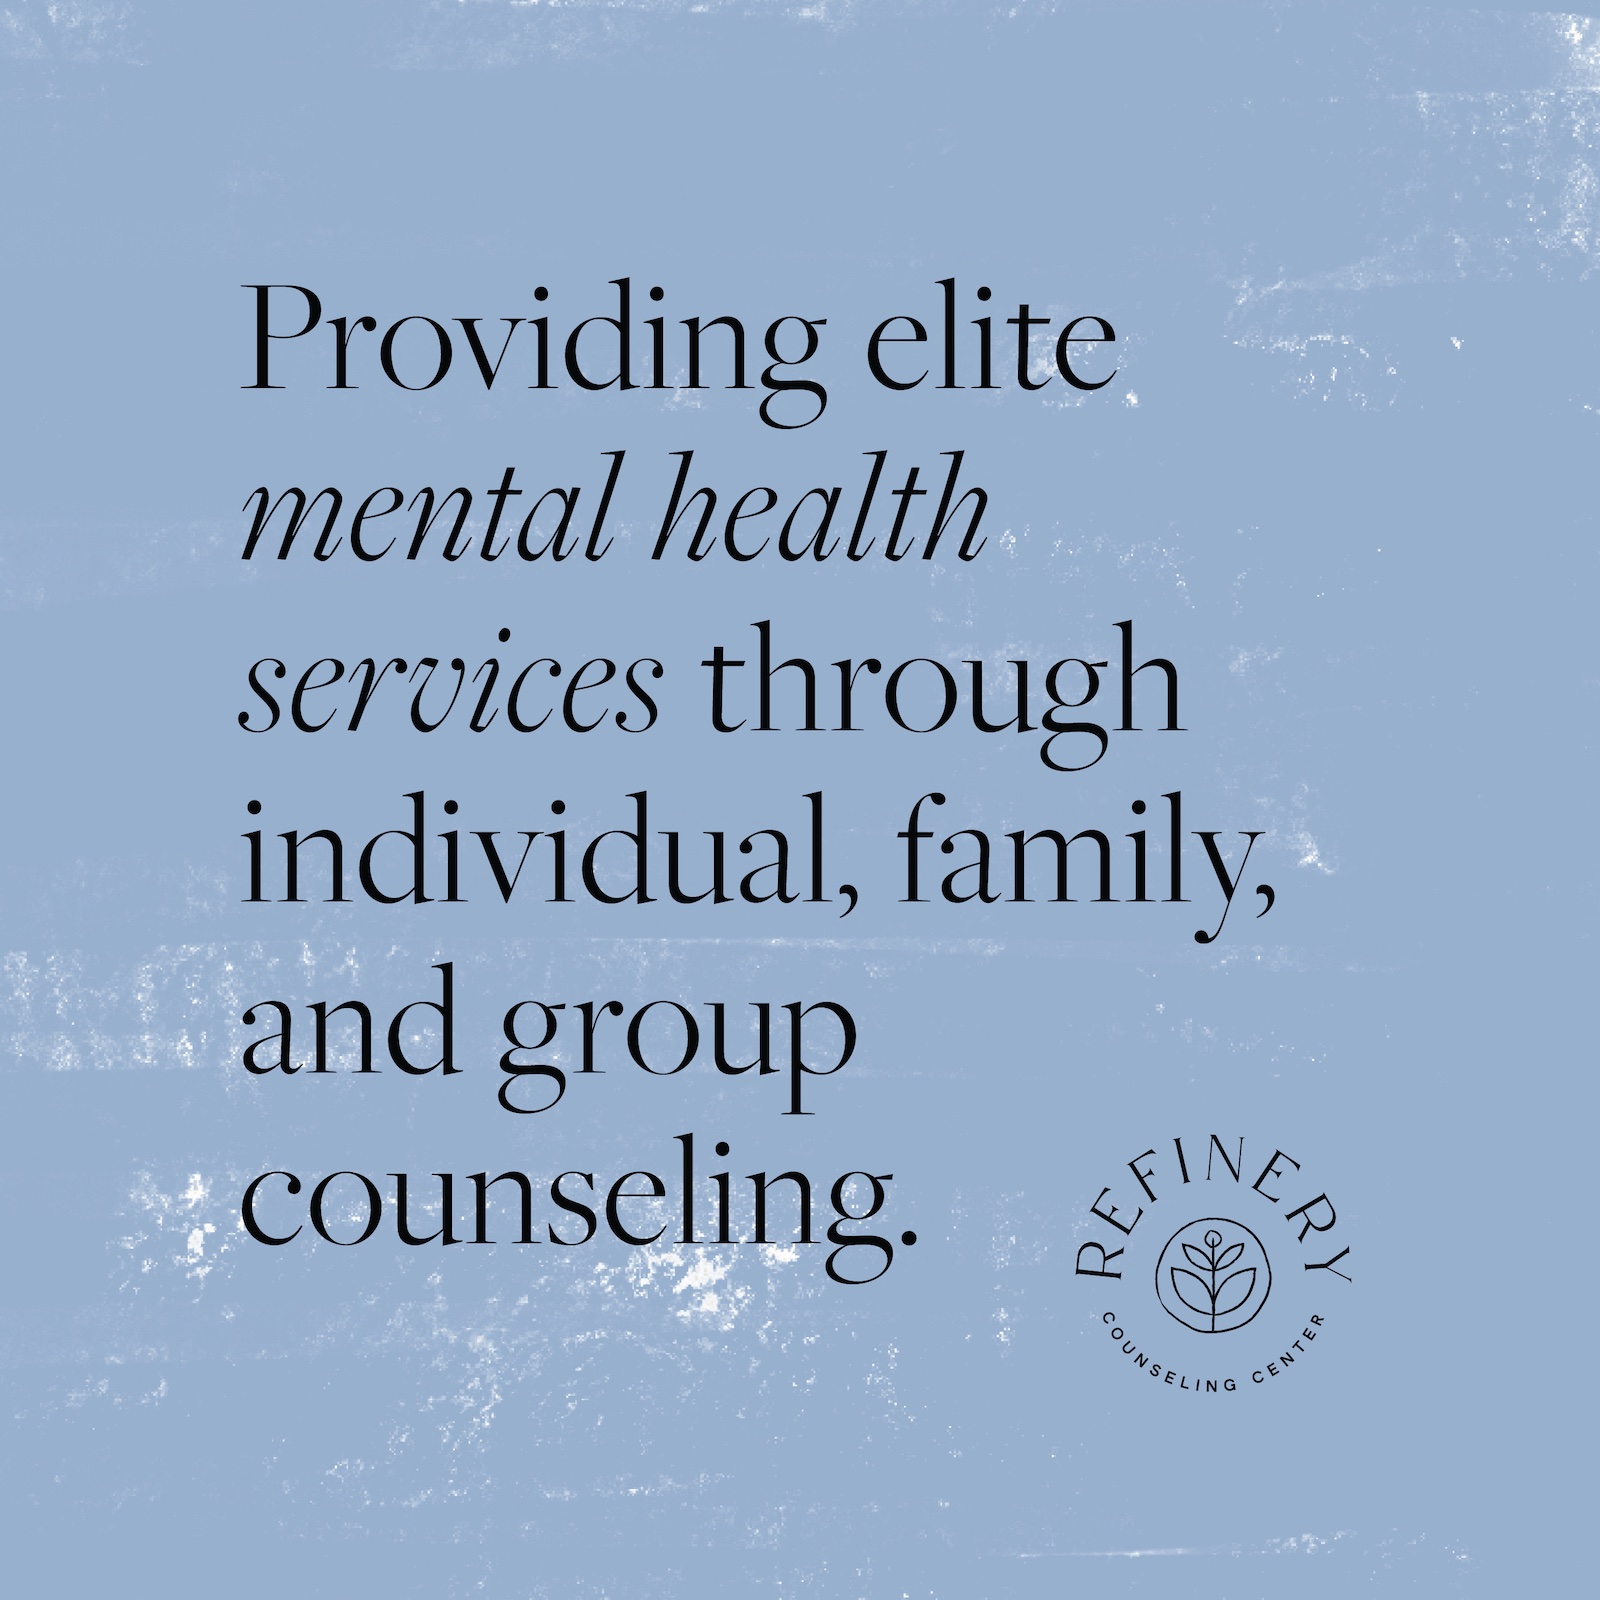 Providing elite mental health services